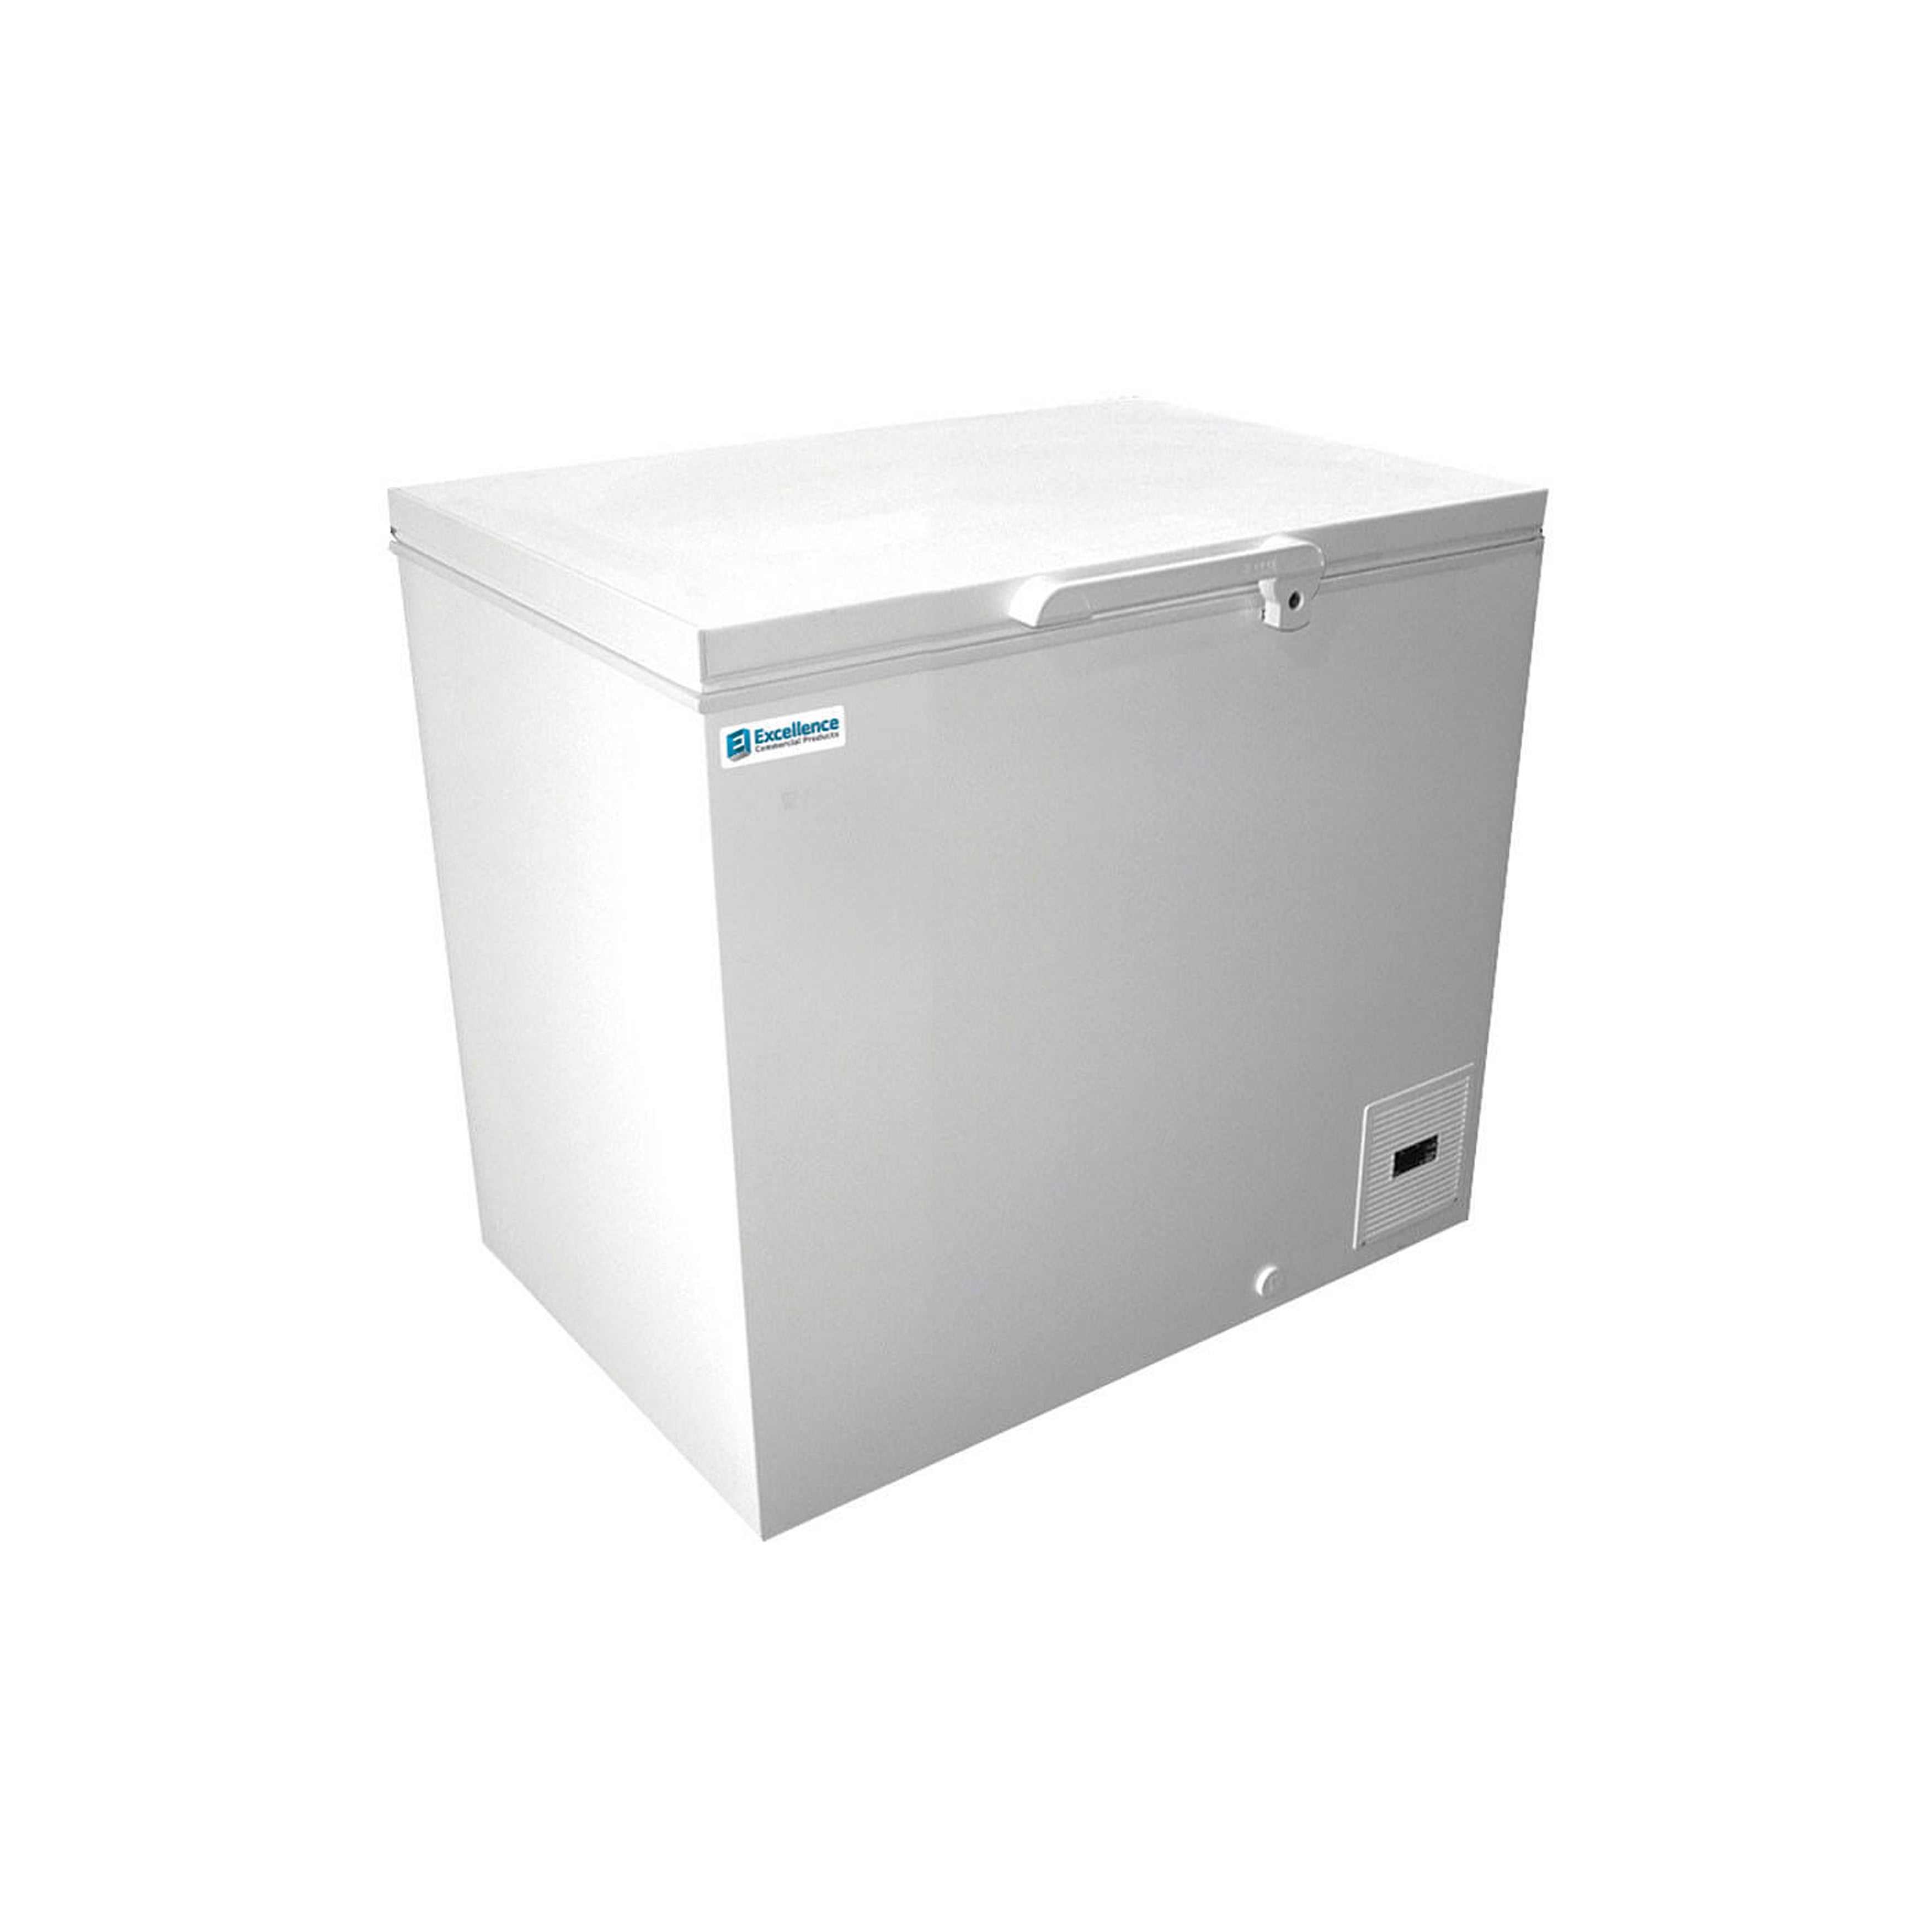 Excellence Industries - UCS-41HC, 41" Commercial Solid Door Chest Freezer 8.1 cu. ft.